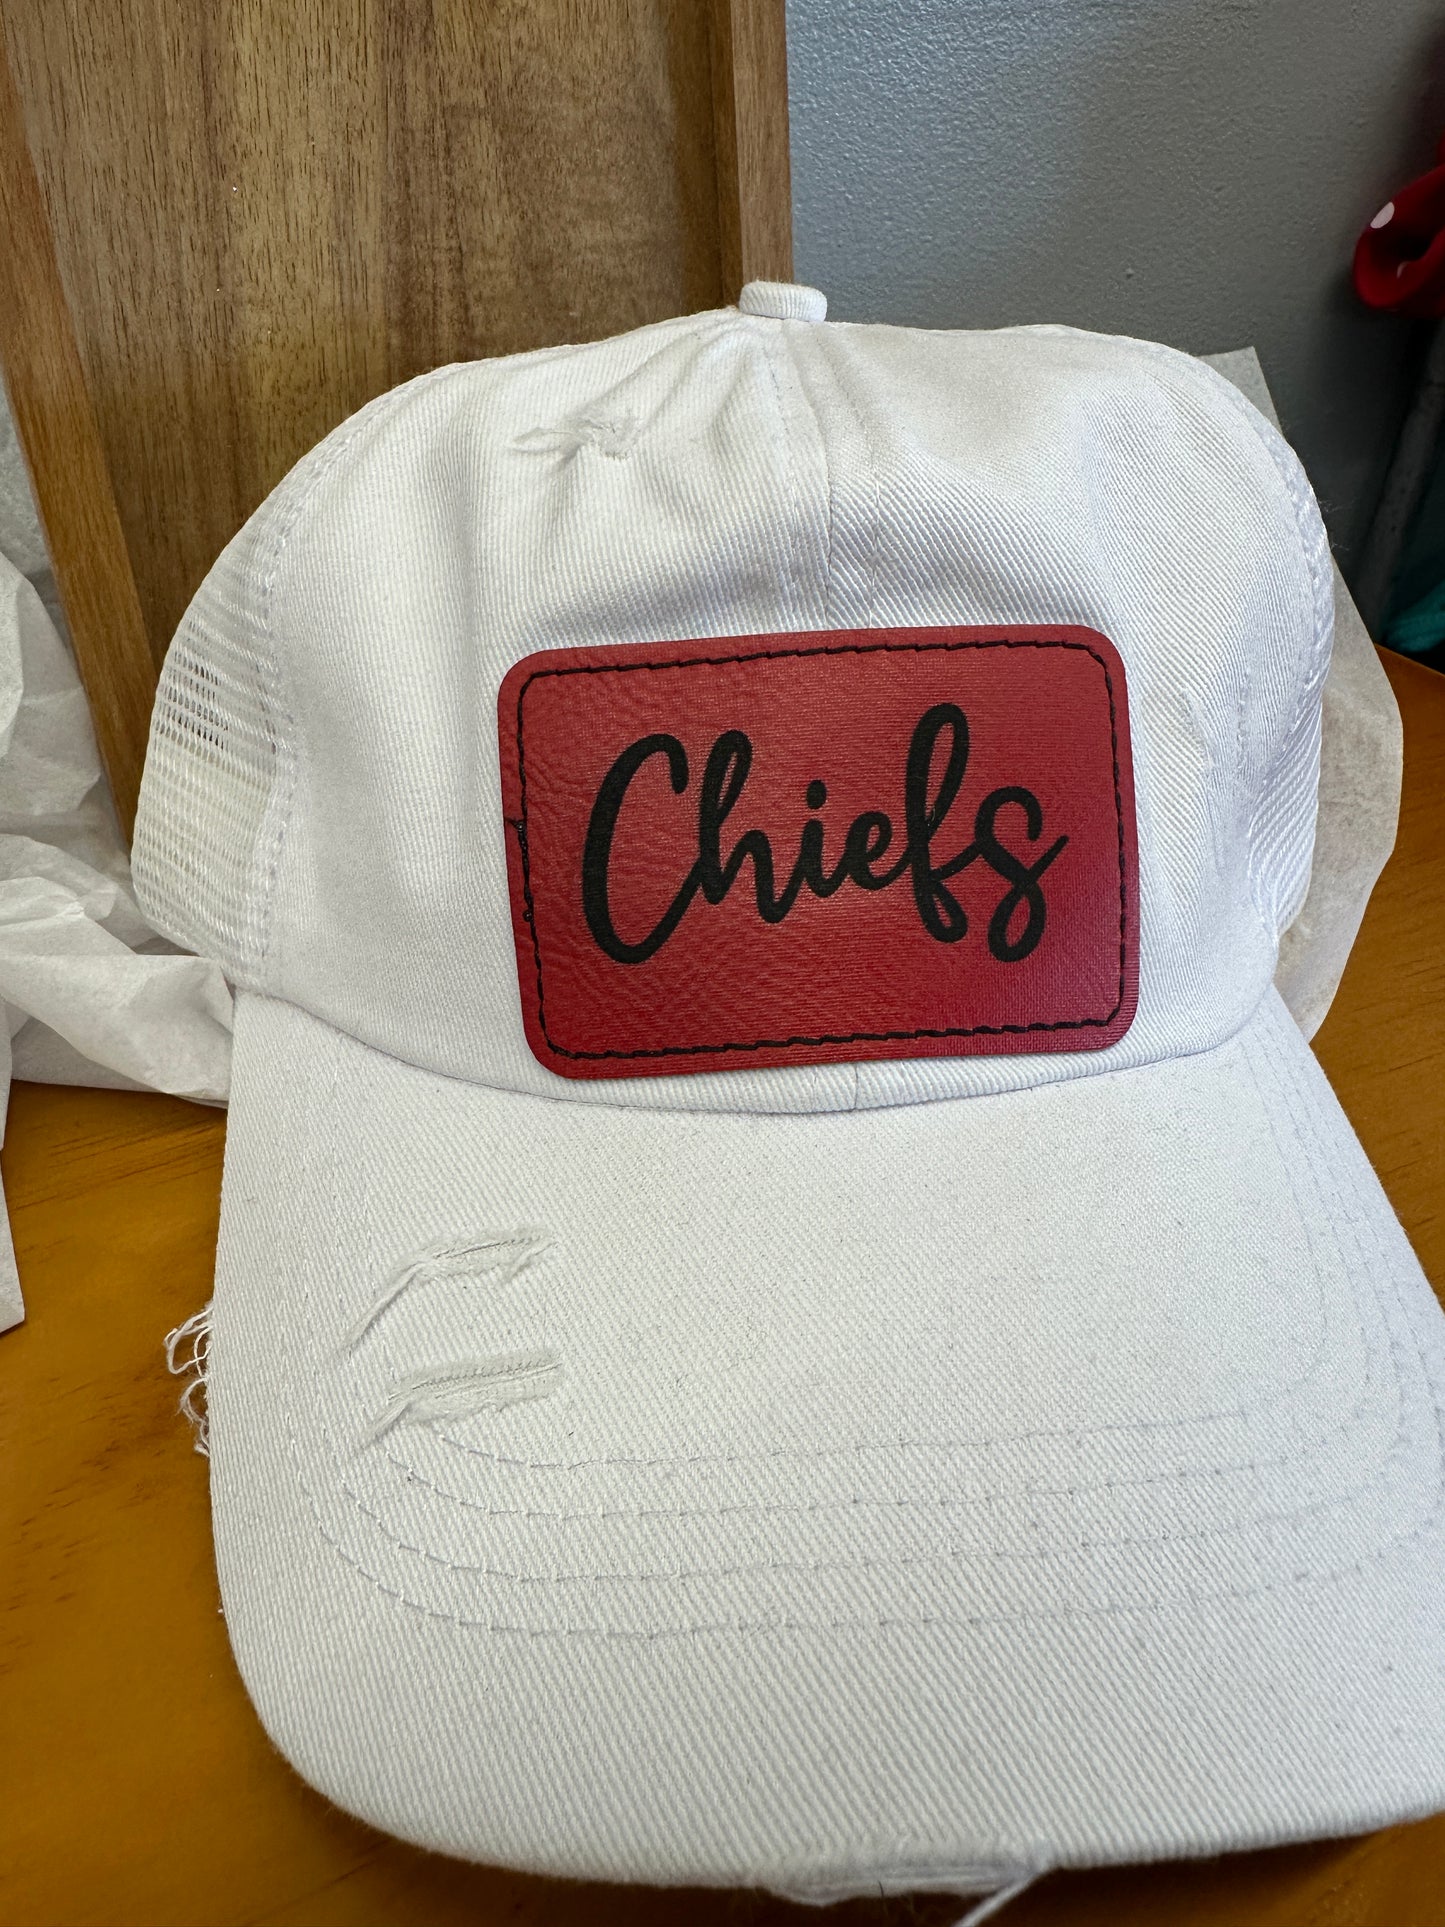 Chiefs Cursive Criss Cross Hat